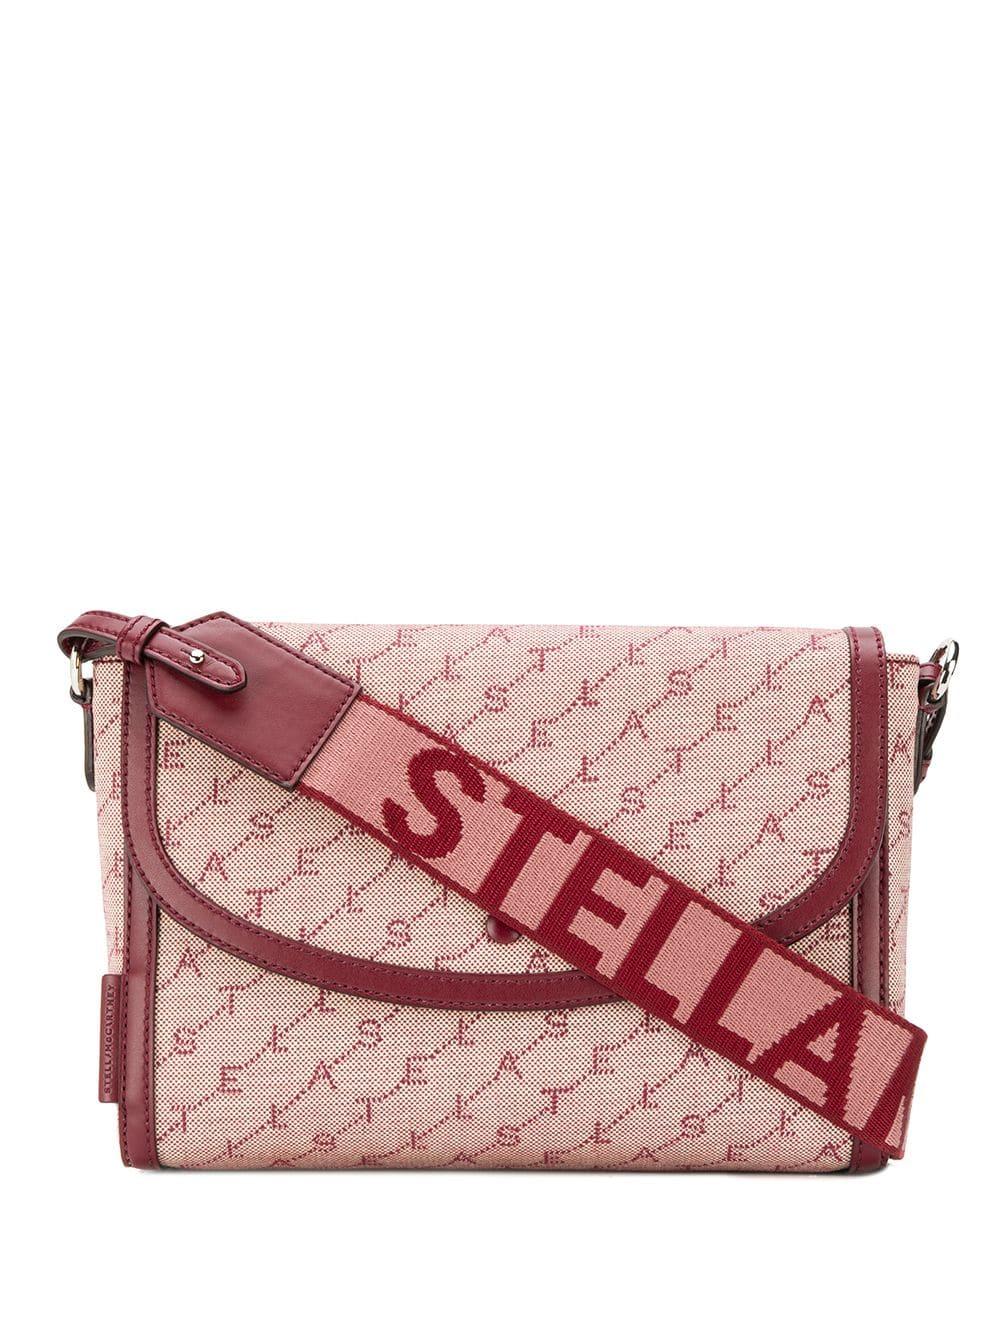 Stella McCartney Monogram Logo Crossbody Bag in Pink - Lyst